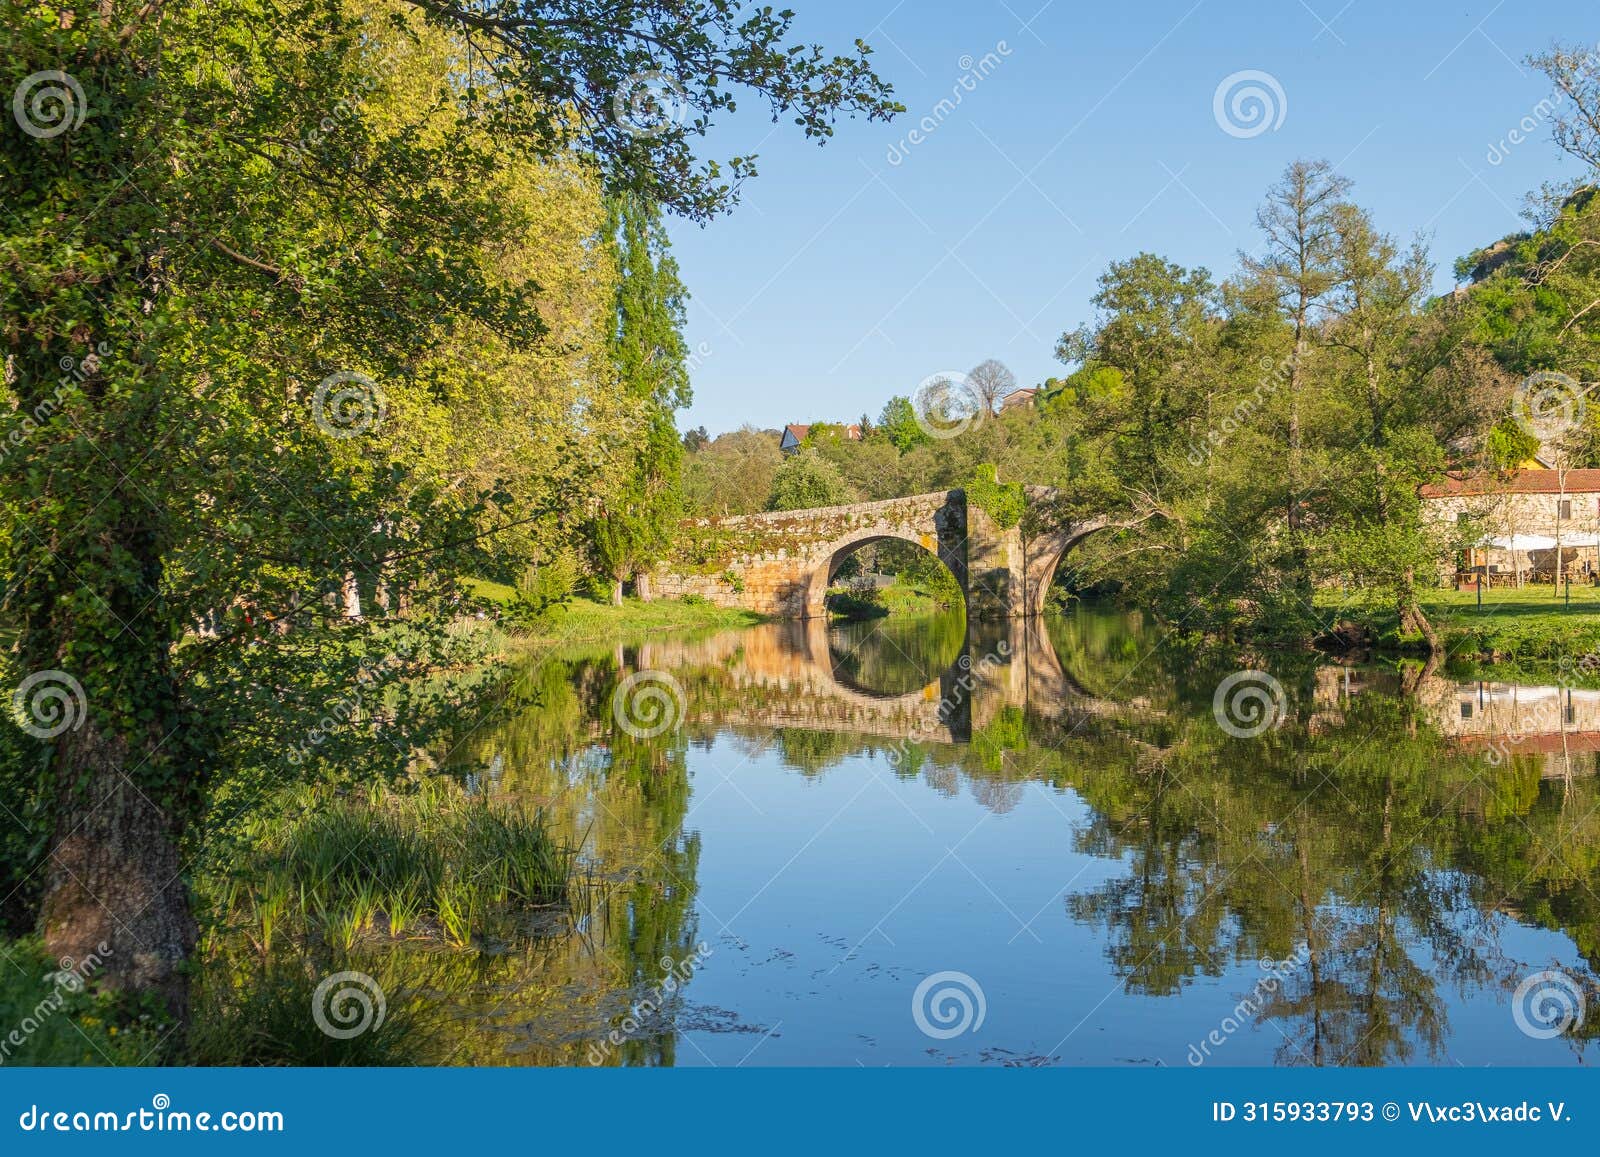 medieval stone bridge over the arnoia river in the beautiful village of allariz, galicia. spain